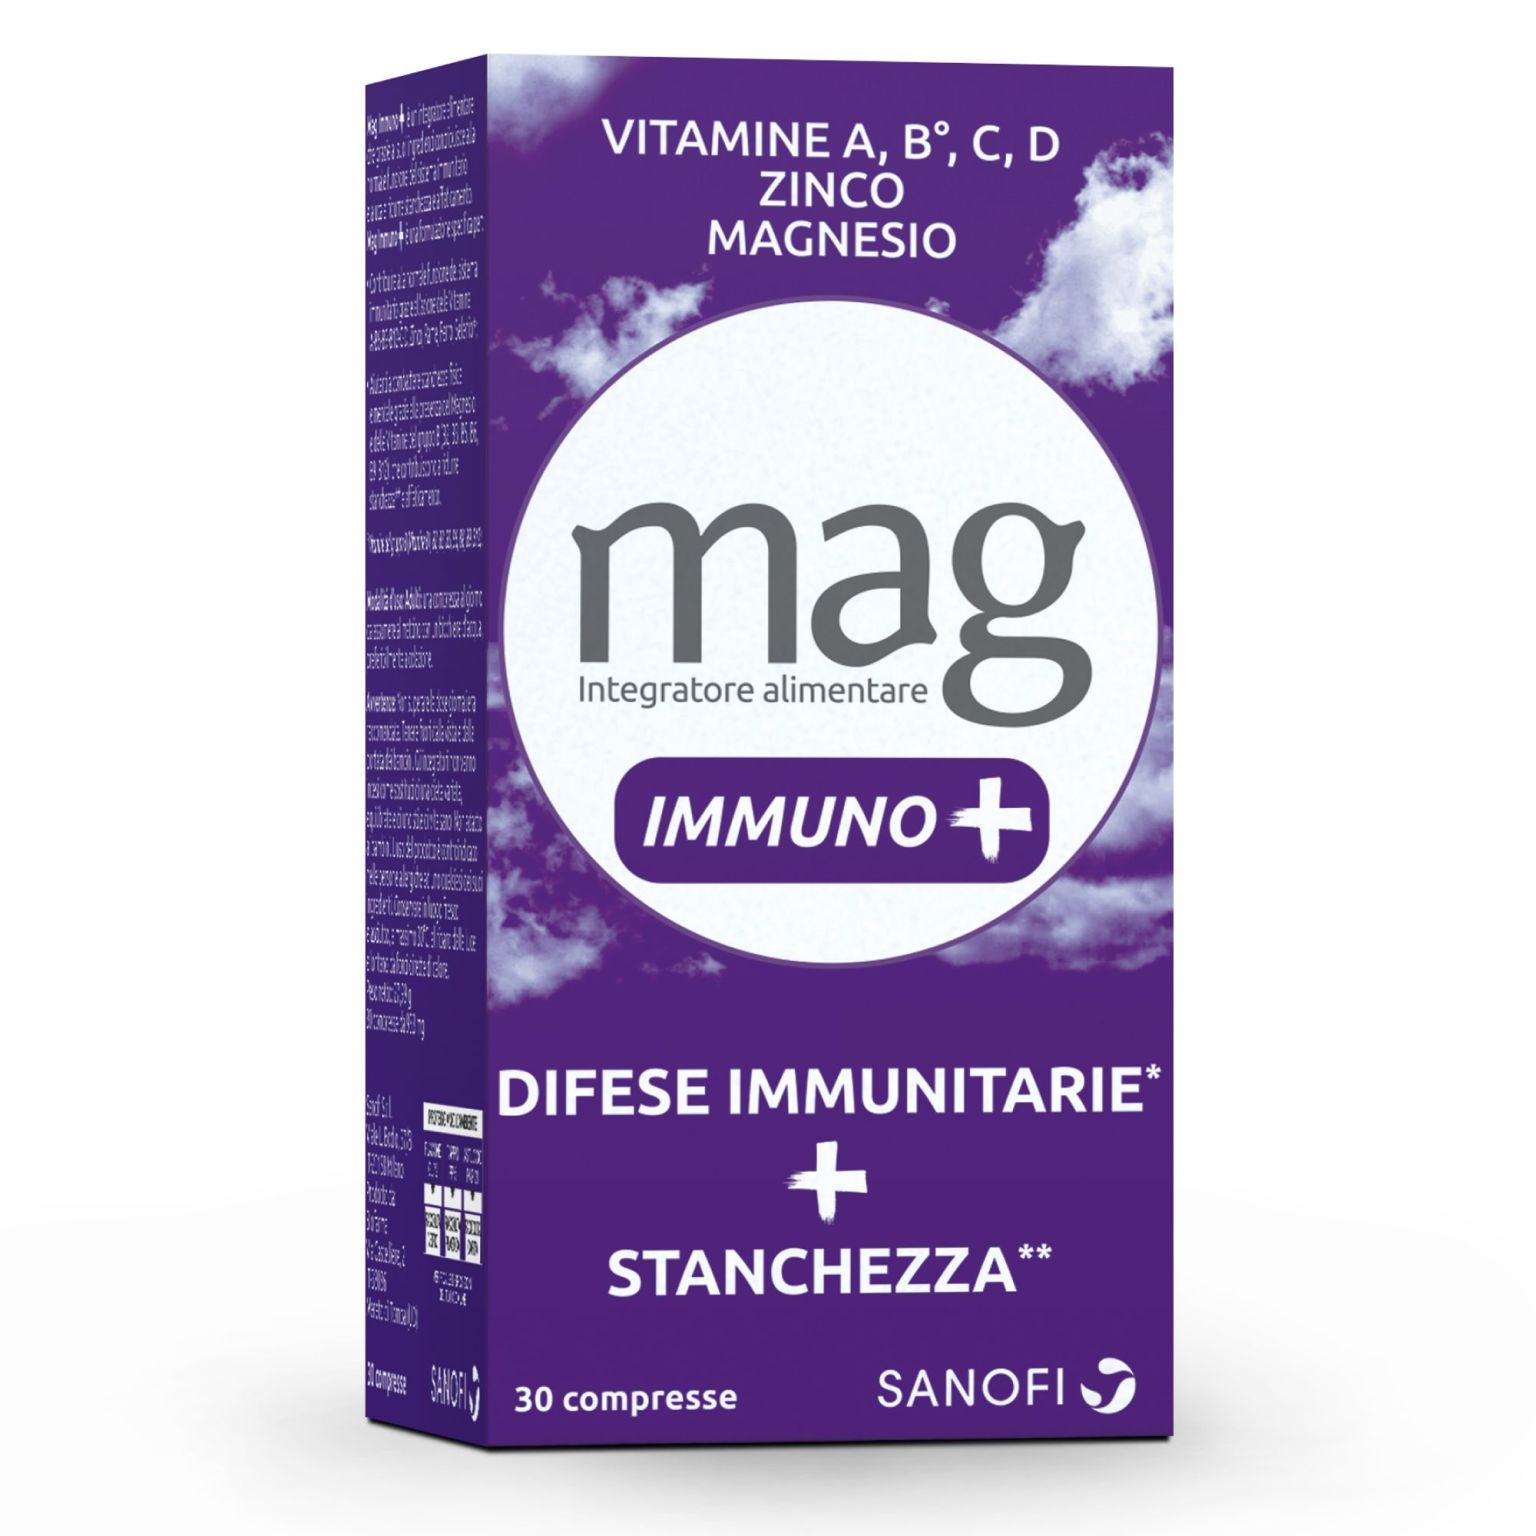 944905191 - Mag Immuno+ Integratore difese immunitarie 30 compresse - 4710128_2.jpg